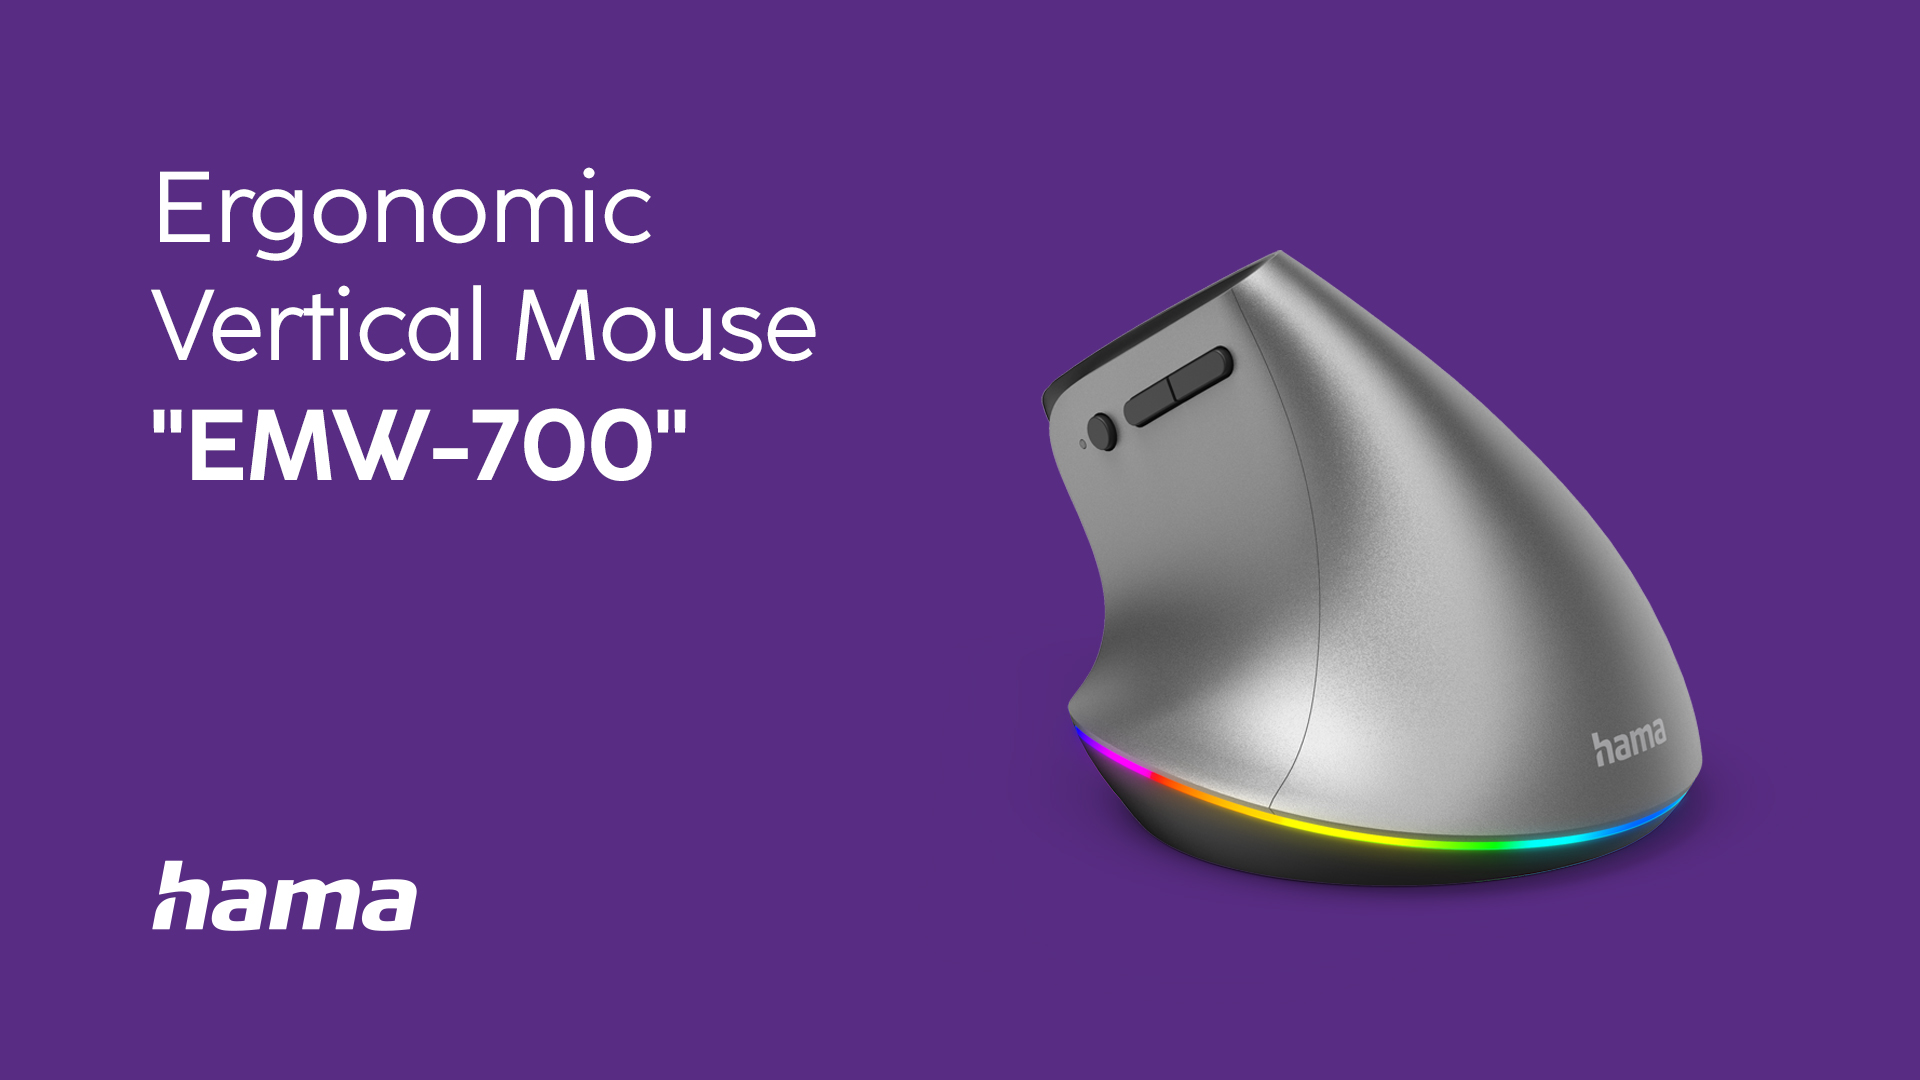 Hama Ergonomic Vertical Mouse "EMW-700"